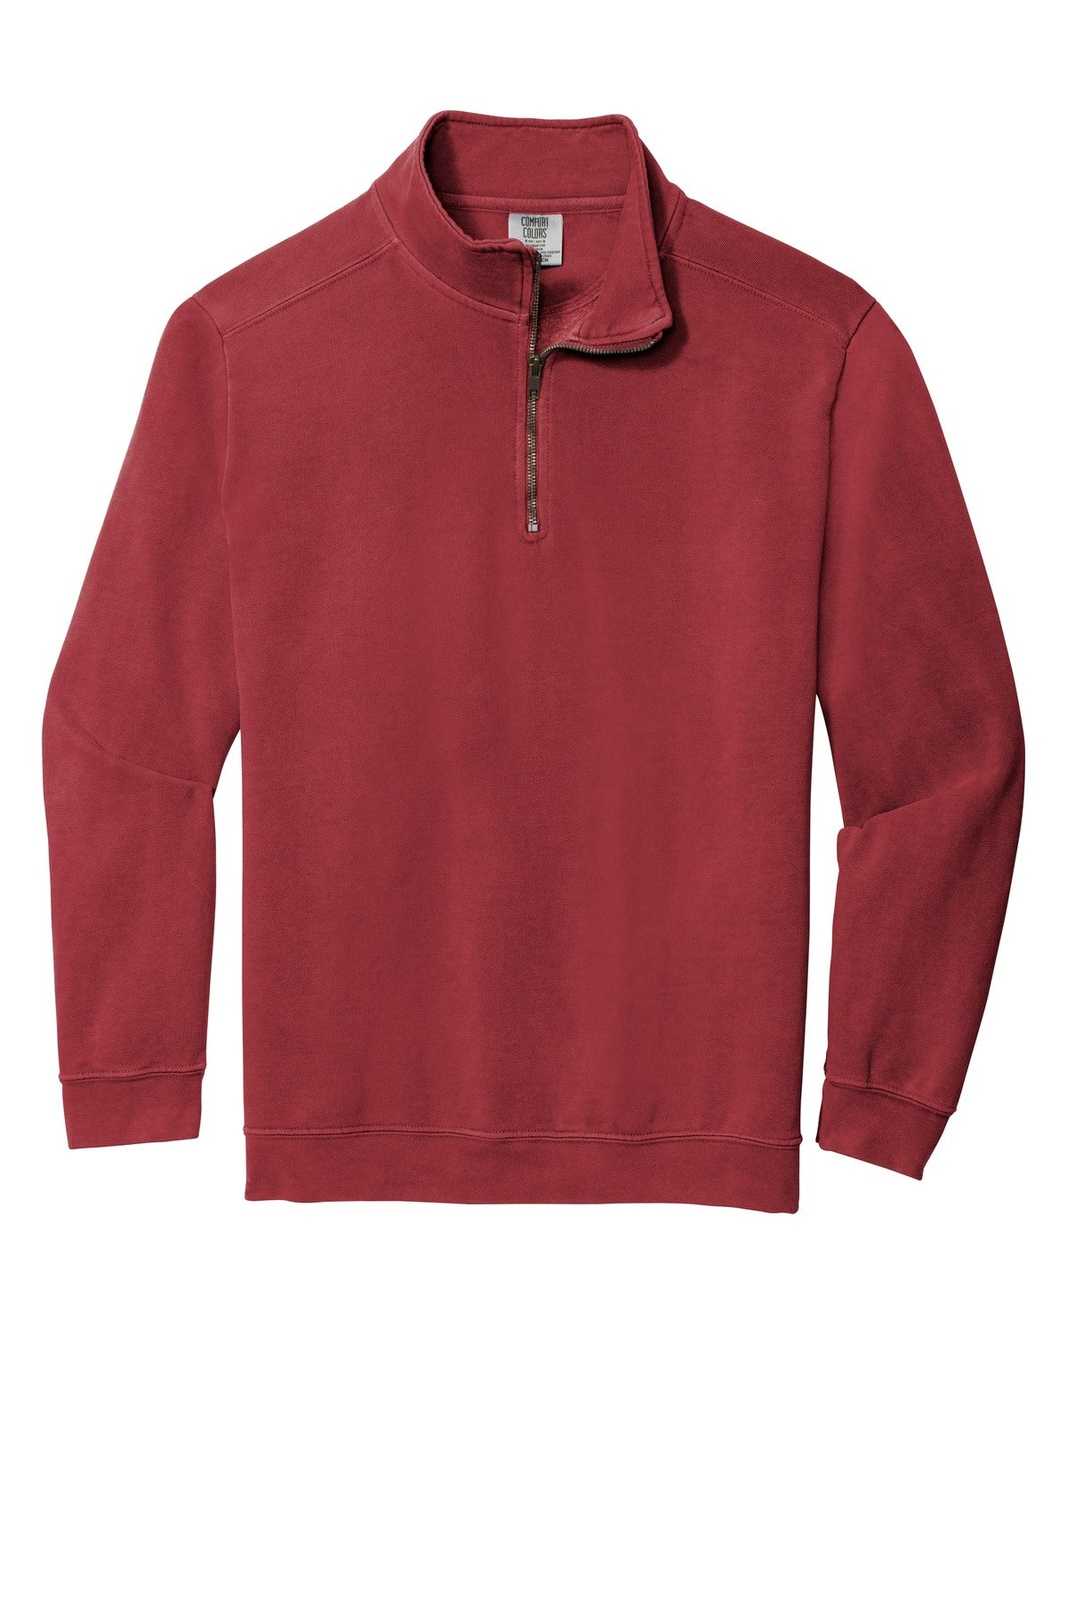 Comfort Colors 1580 Ring Spun 1/4-Zip Sweatshirt - Crimson - HIT a Double